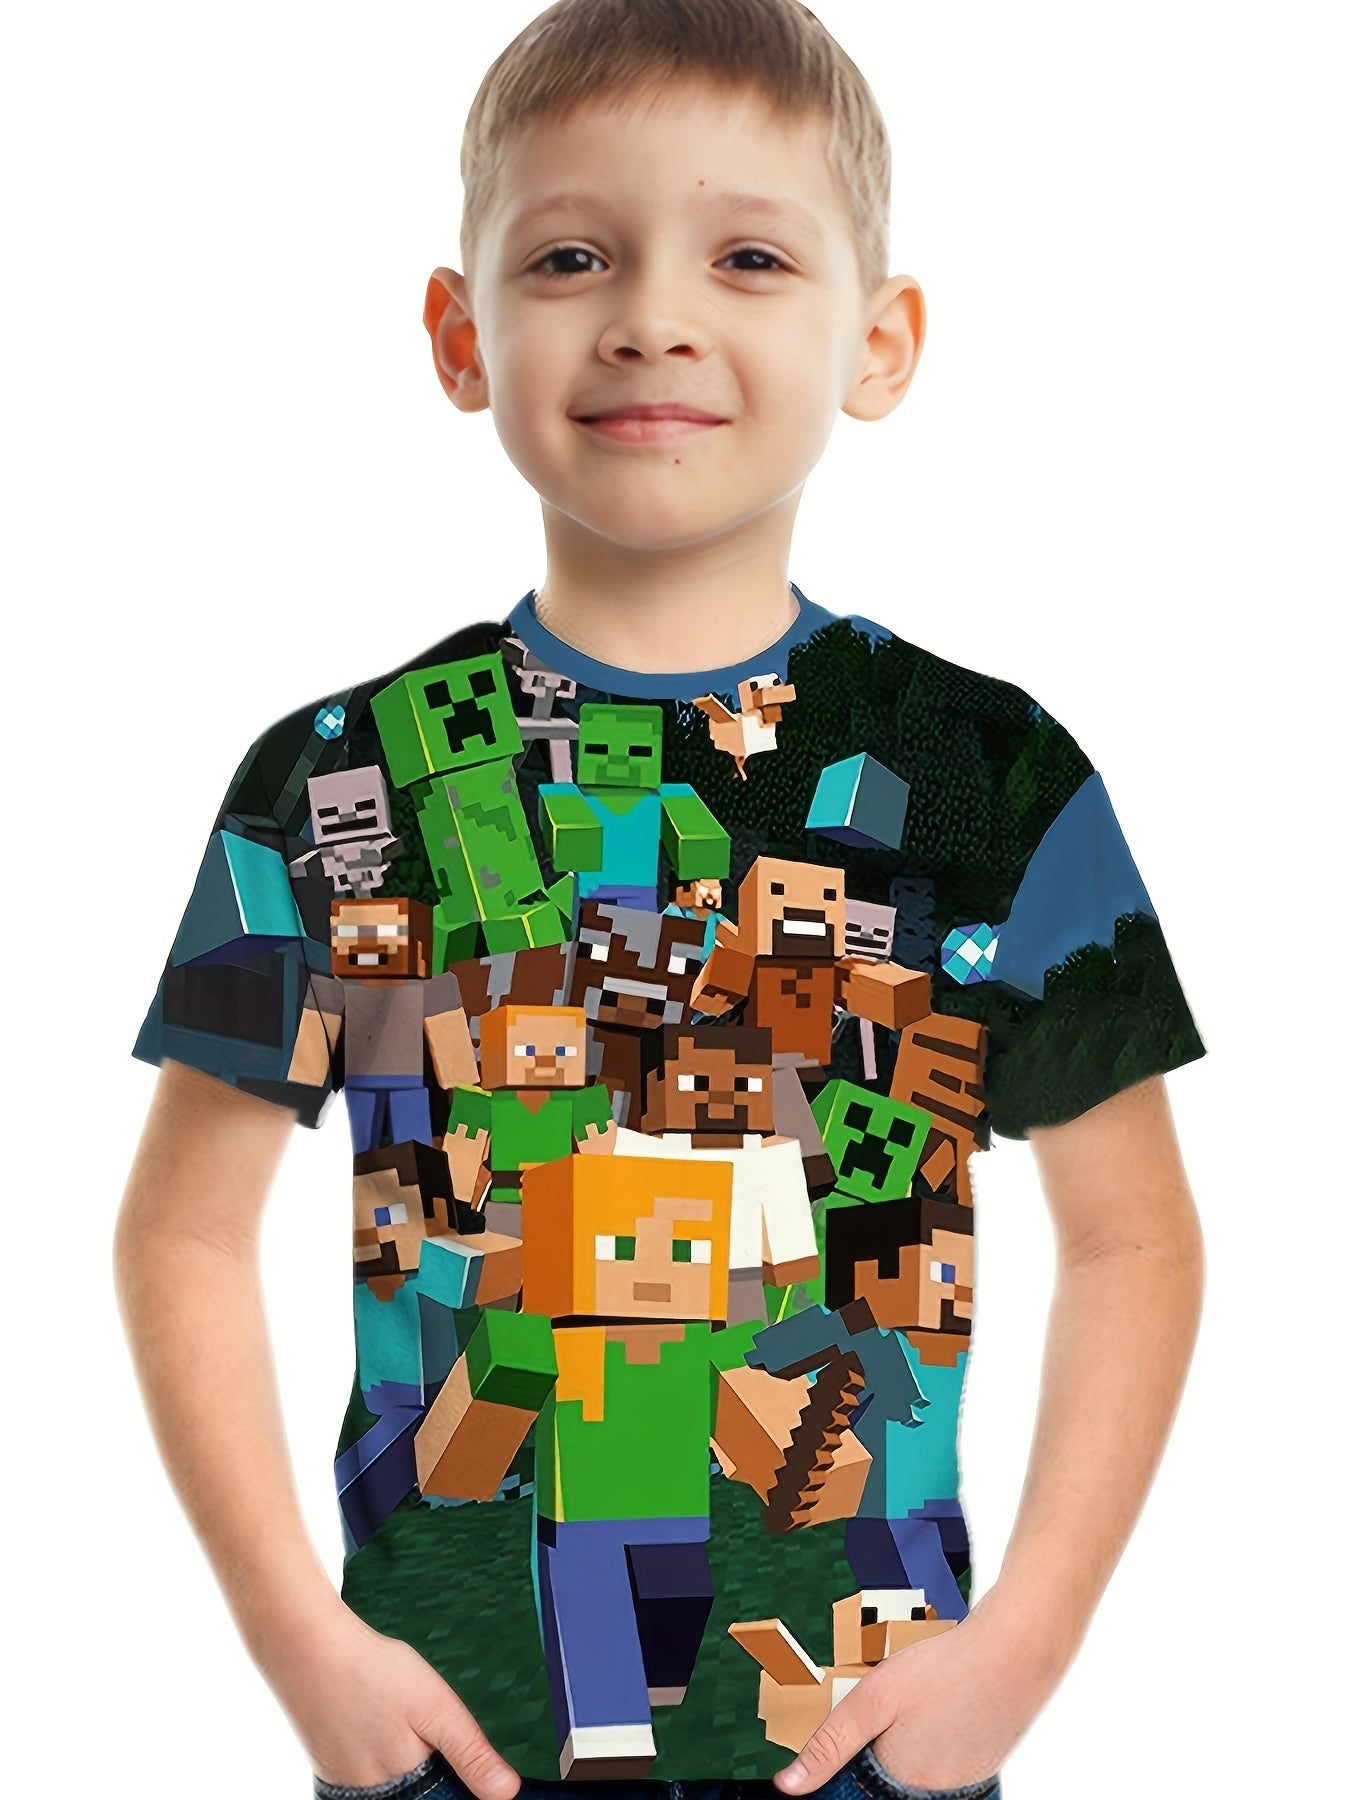 Building Blocks 3D Print Boys Creative T-shirt, Casual Lightweight Comfy Short Sleeve Tee Tops, Kids Clothings For Summer